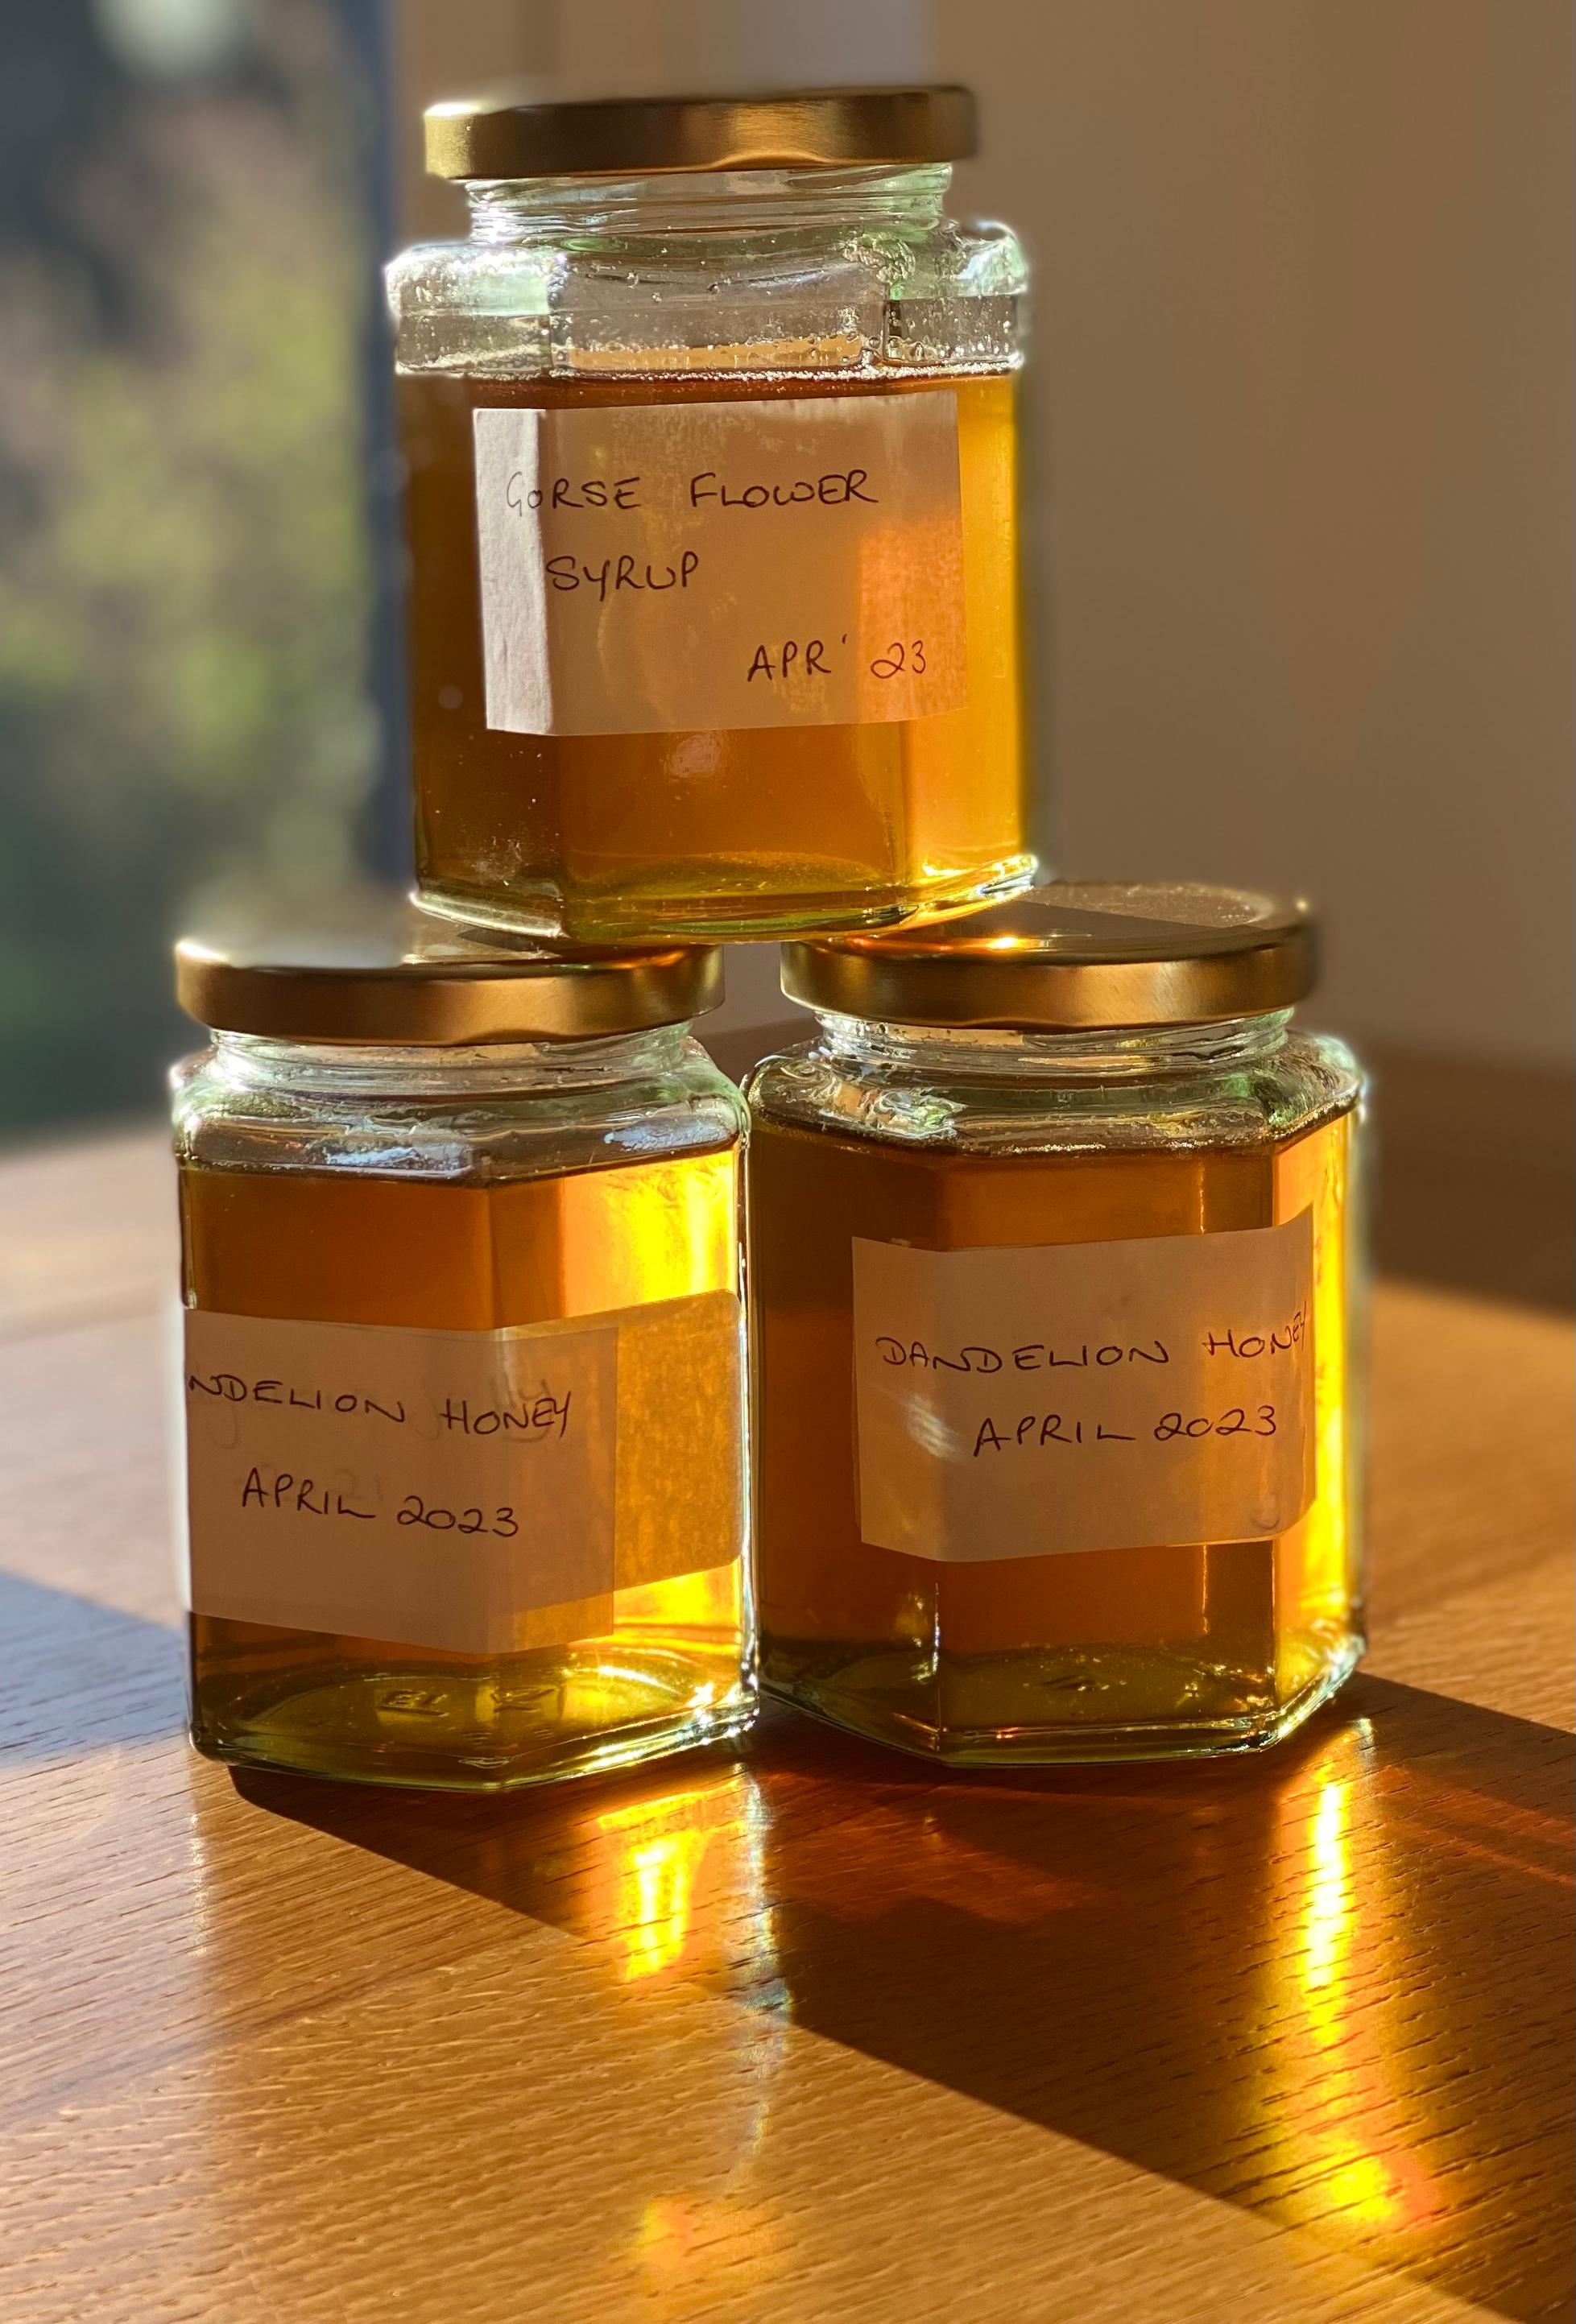 Dandelion "honey" recipe